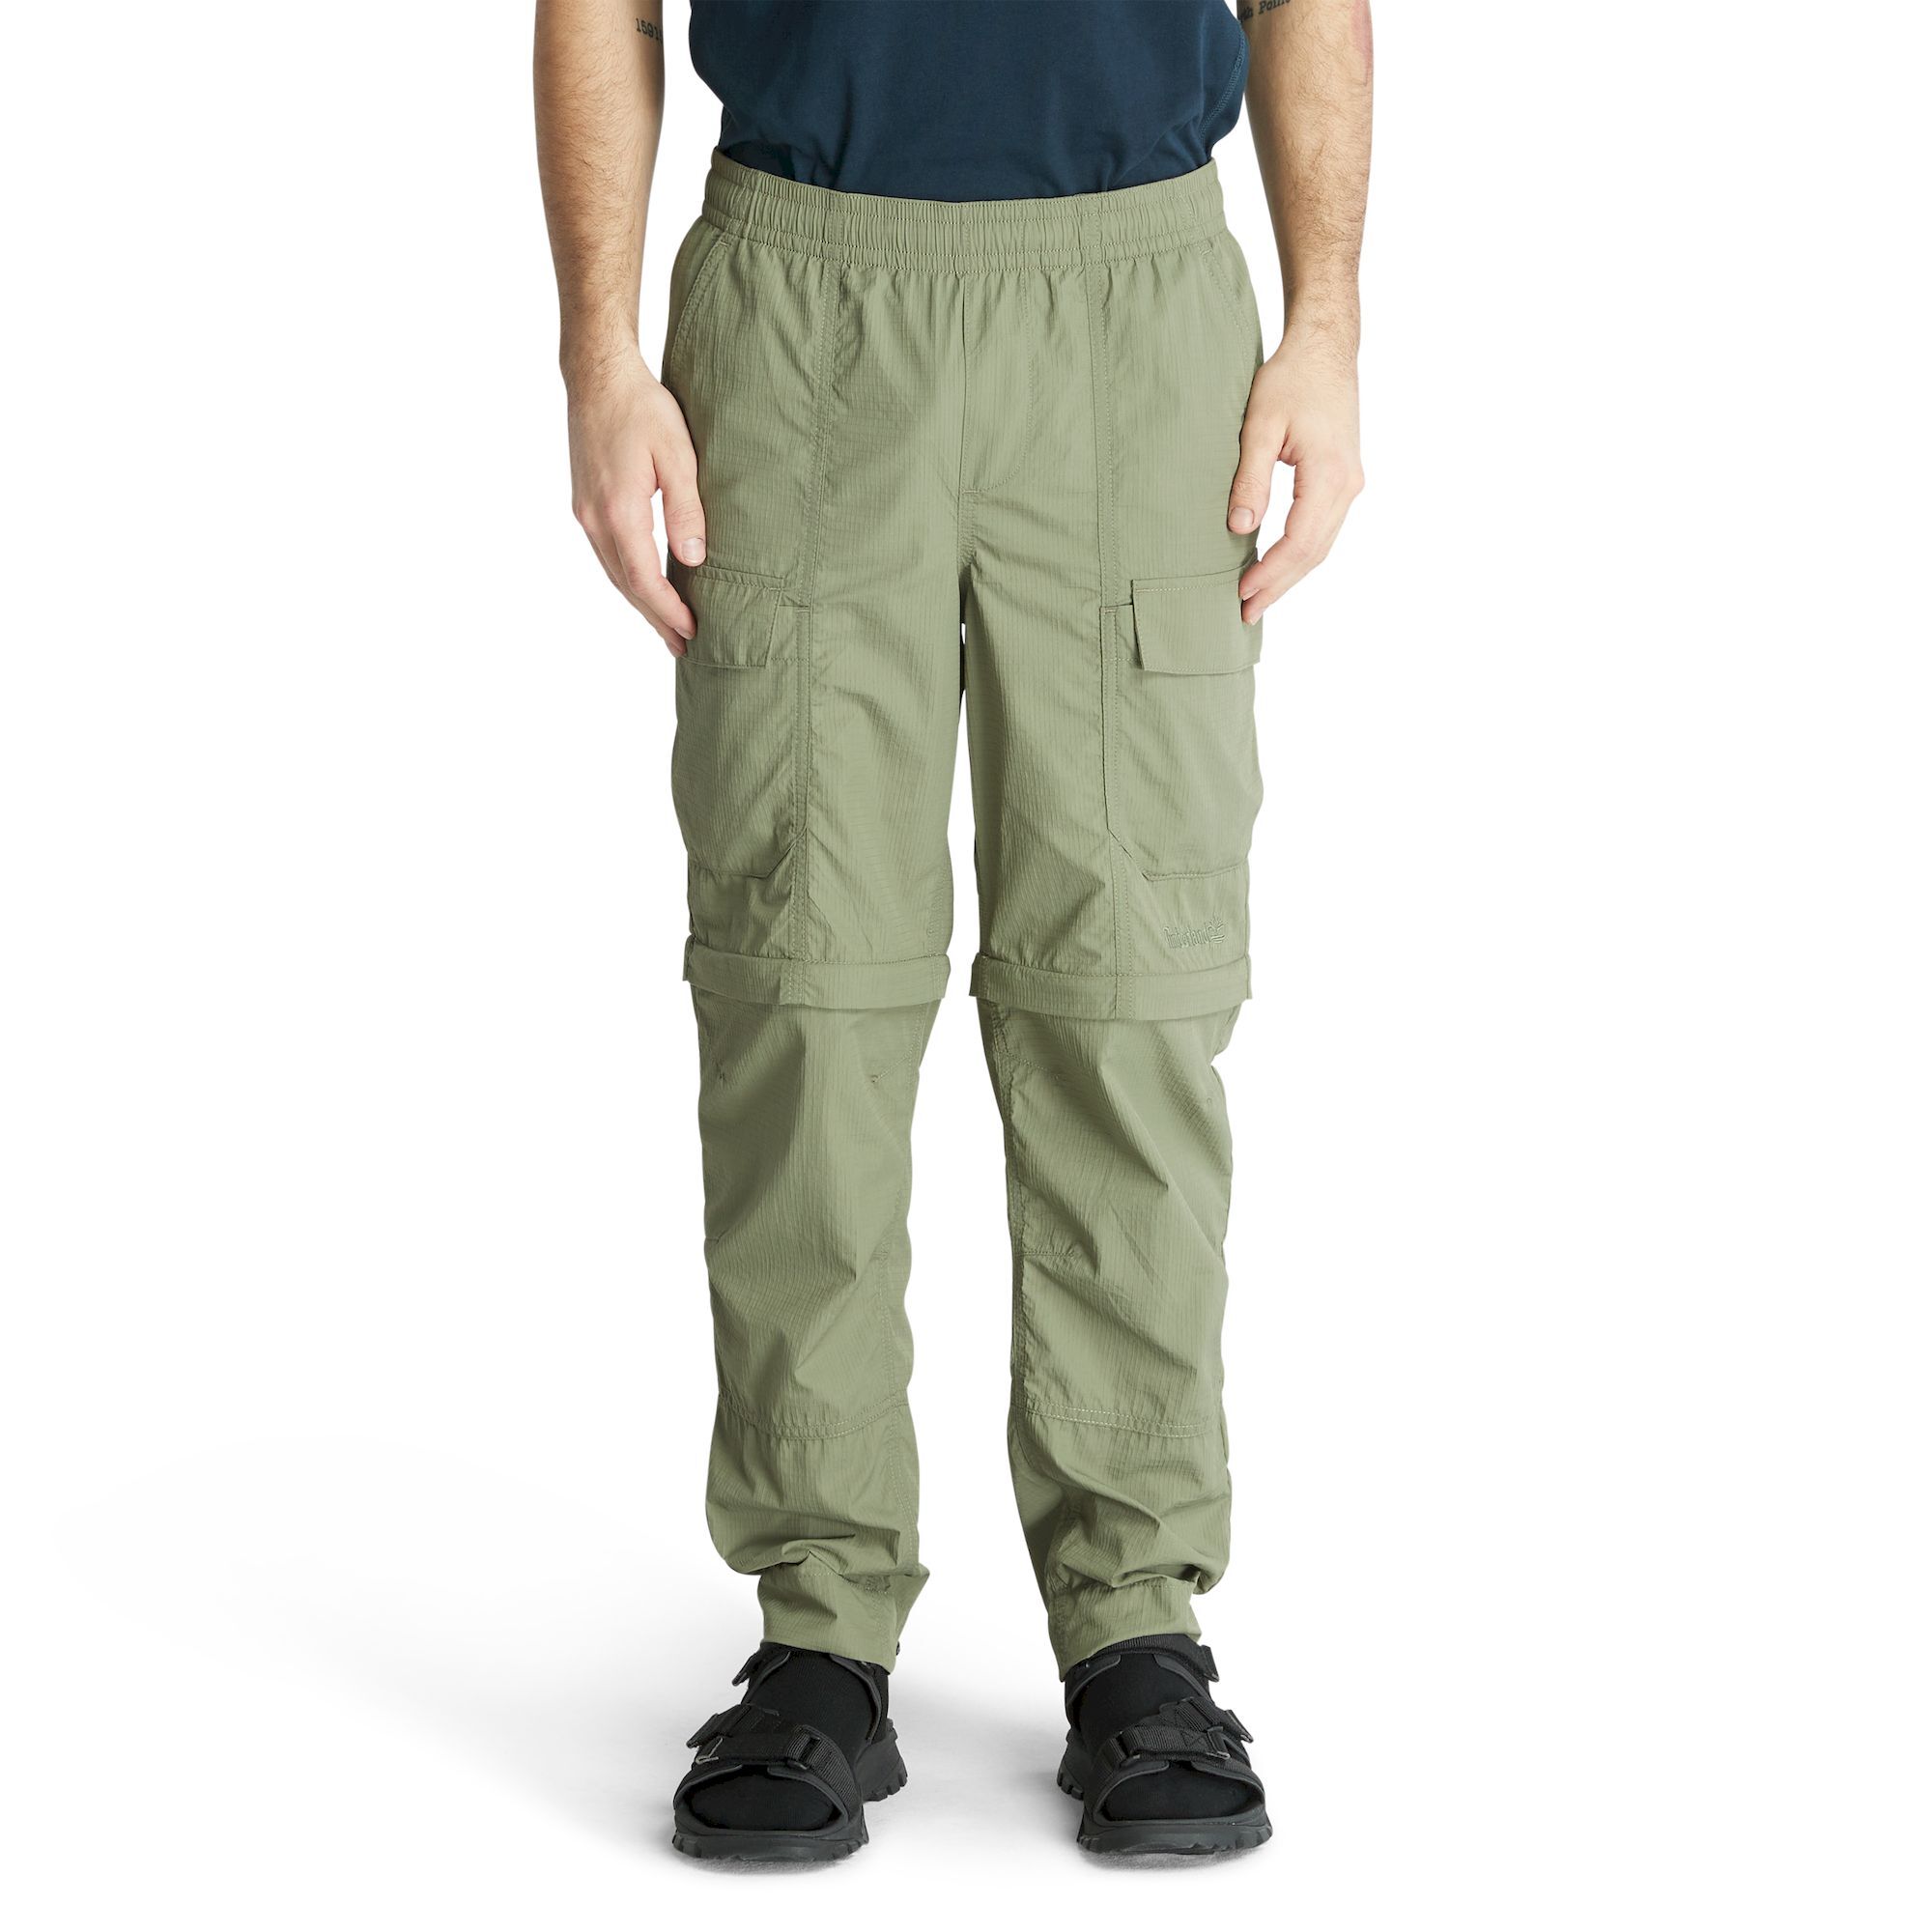 Timberland DWR Pant - Walking trousers - Men's